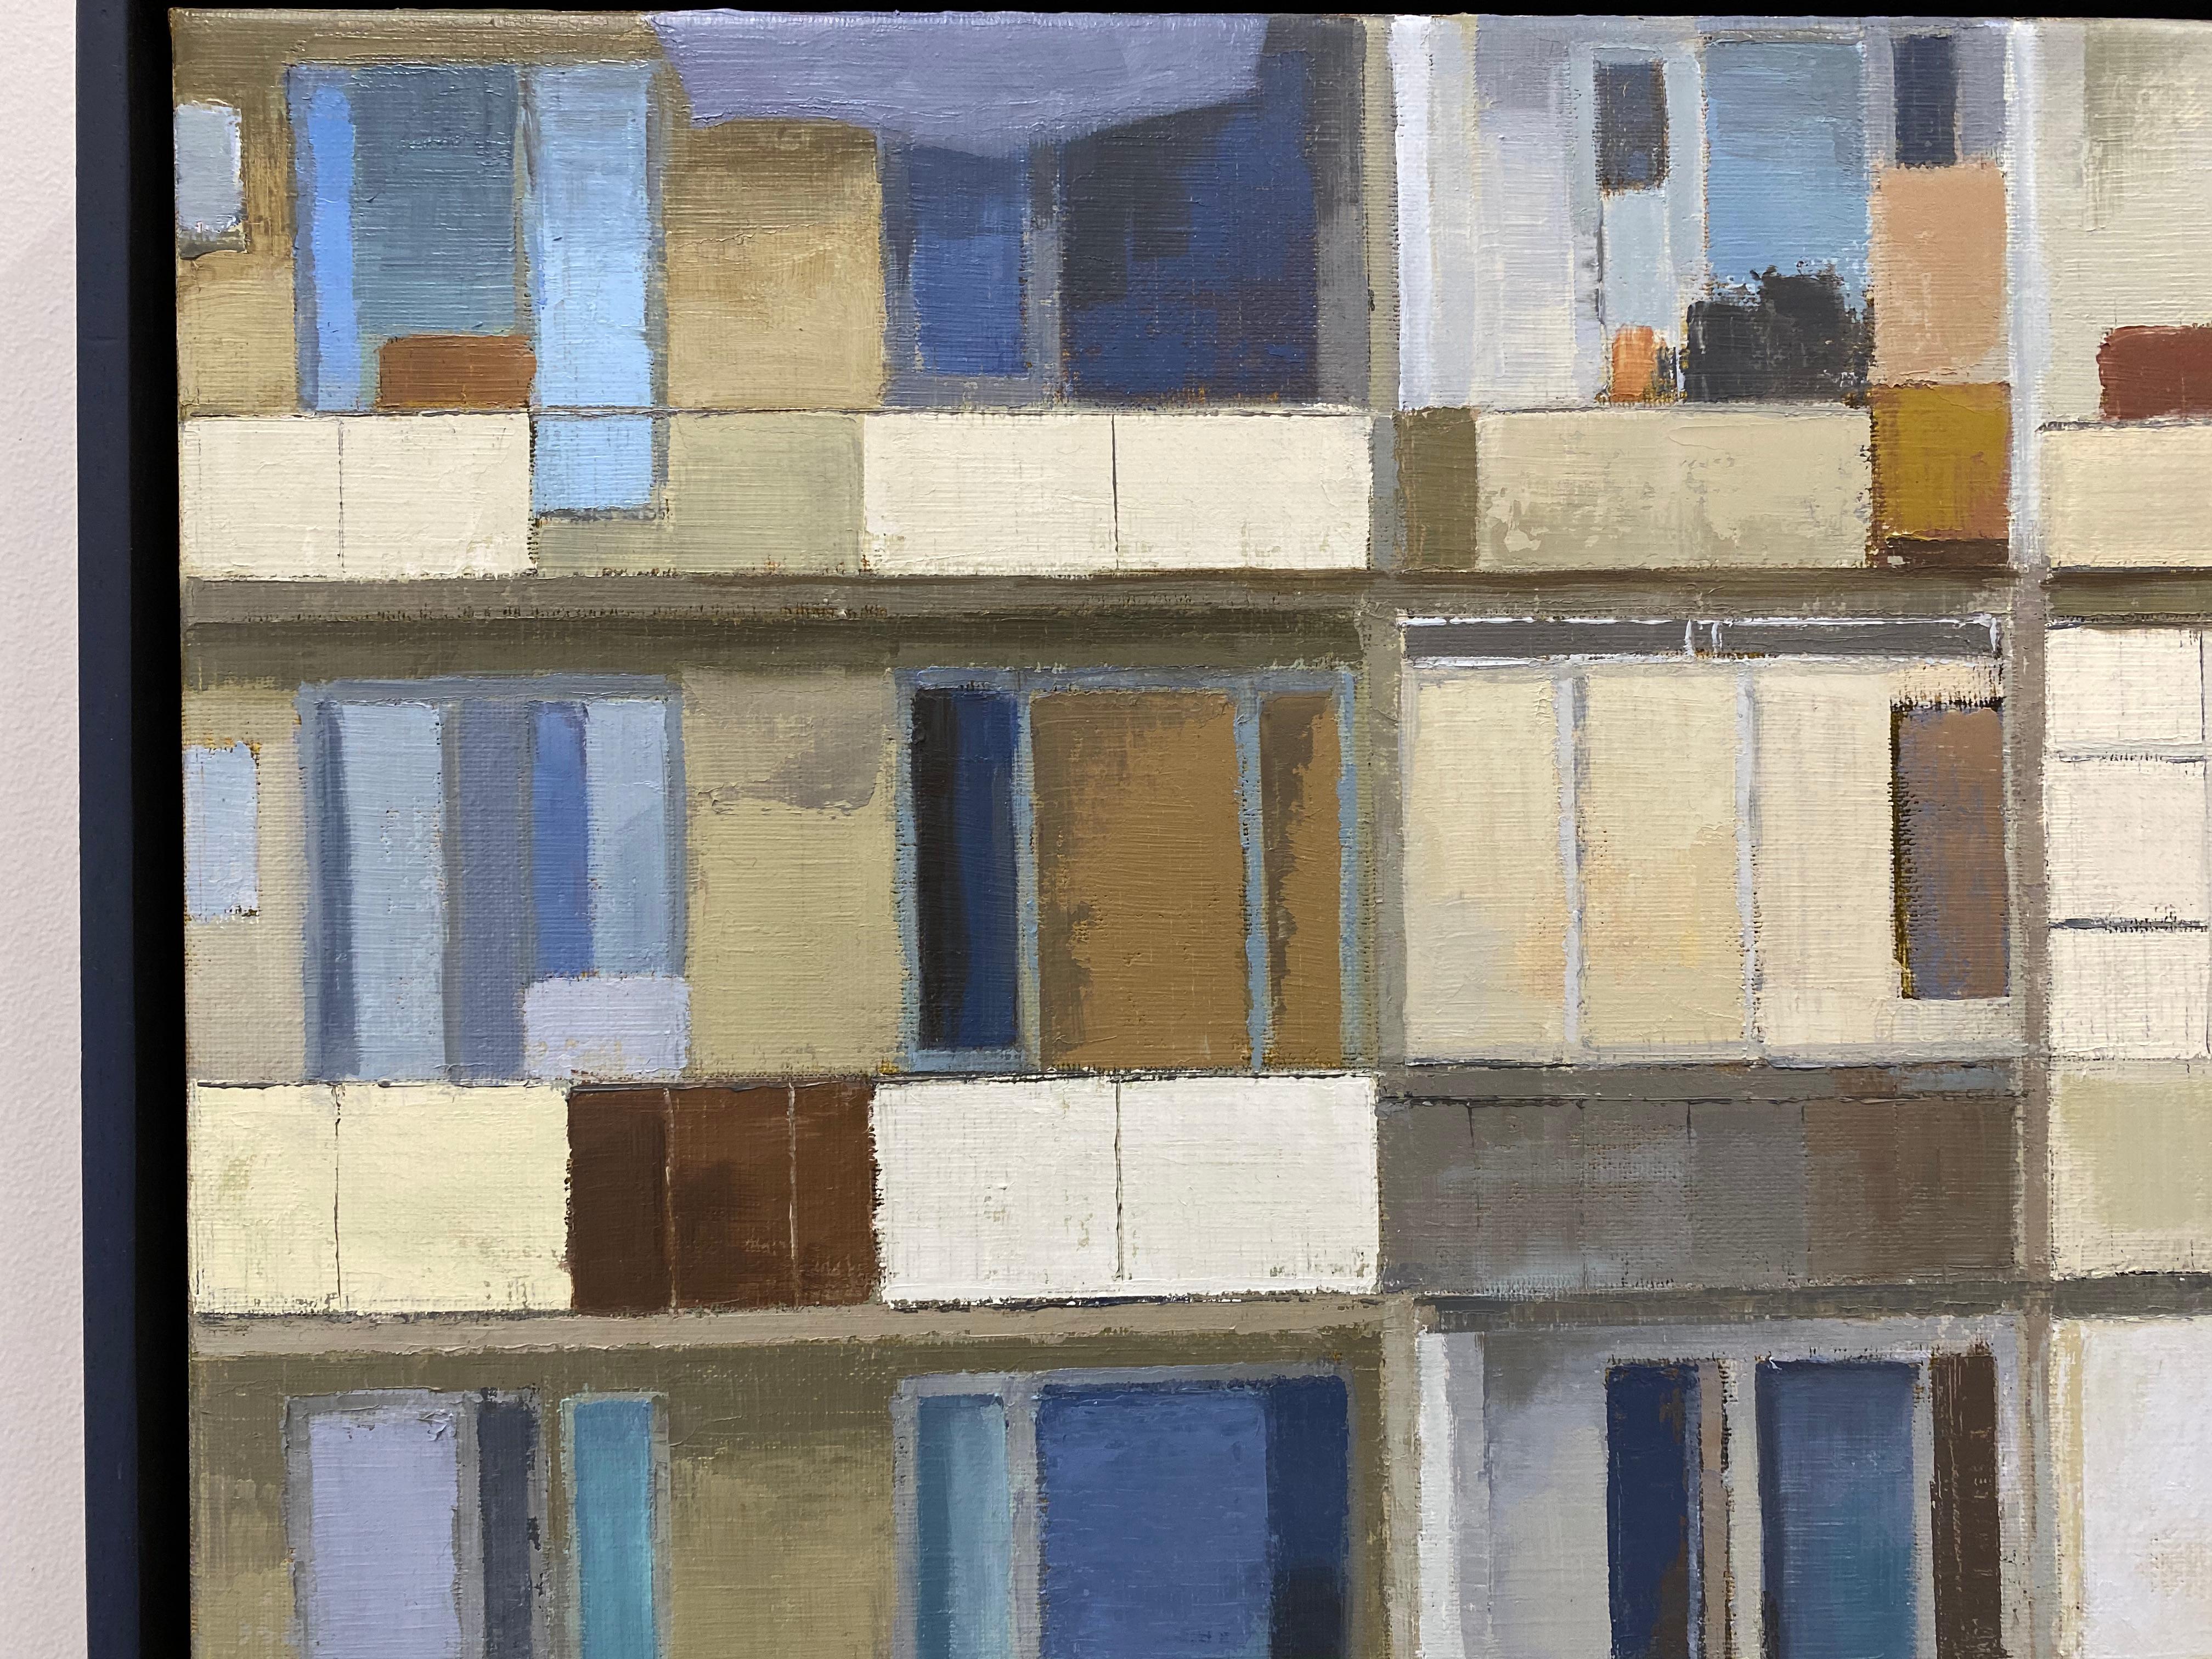 Apartment Building -21st Century Contemporary City scape Painting  1